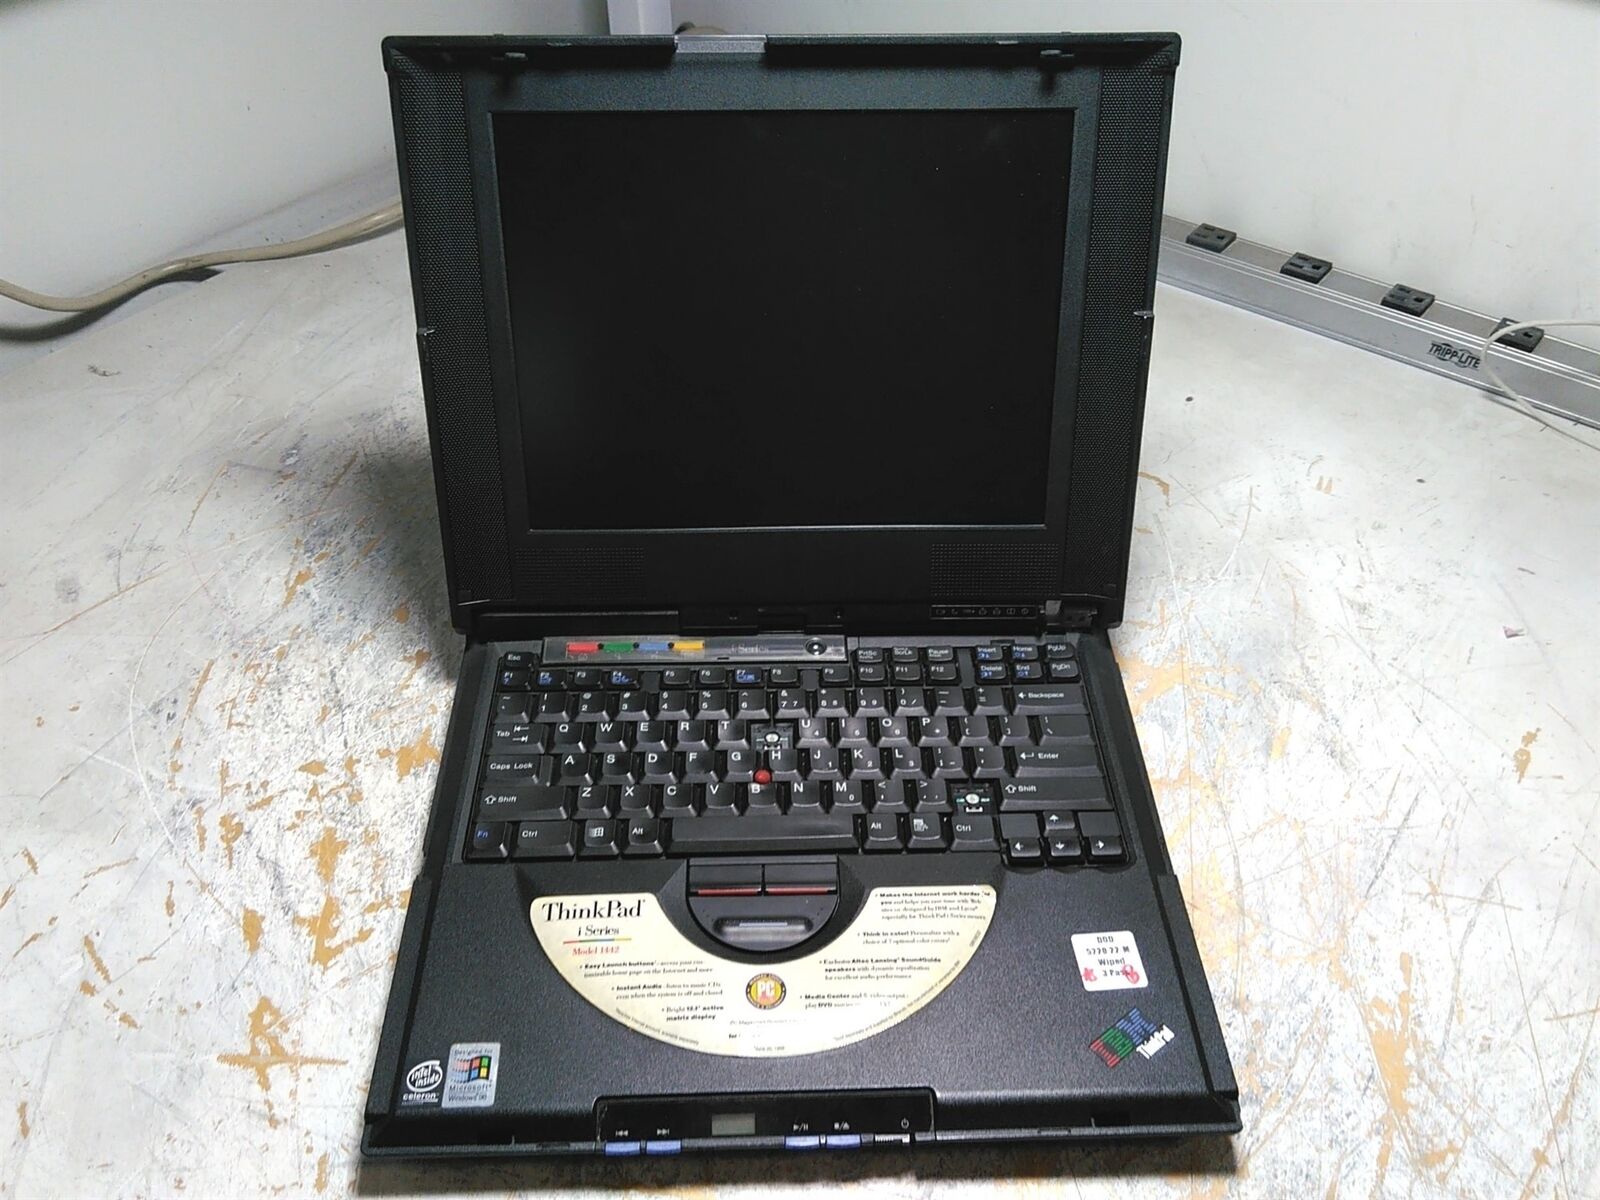 Defective IBM ThinkPad i Series 1442 Laptop Pentium III 500MHz 128MB 6GB AS-IS